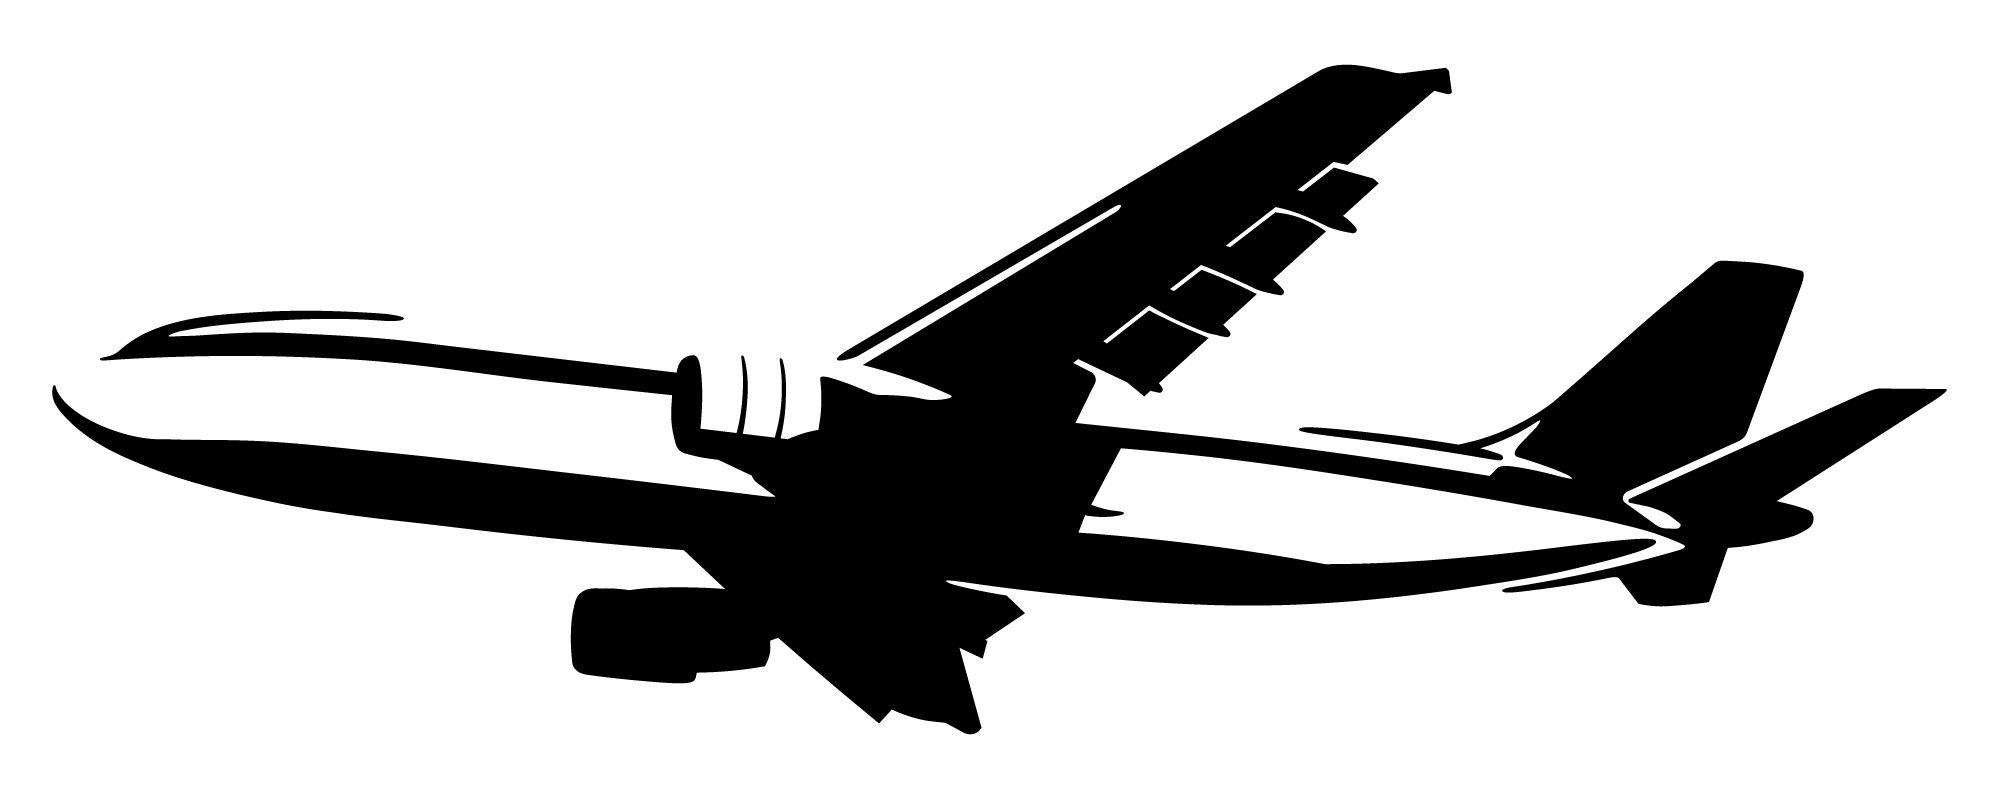 Airplain Logo - Free Aeroplane Logo, Download Free Clip Art, Free Clip Art on ...